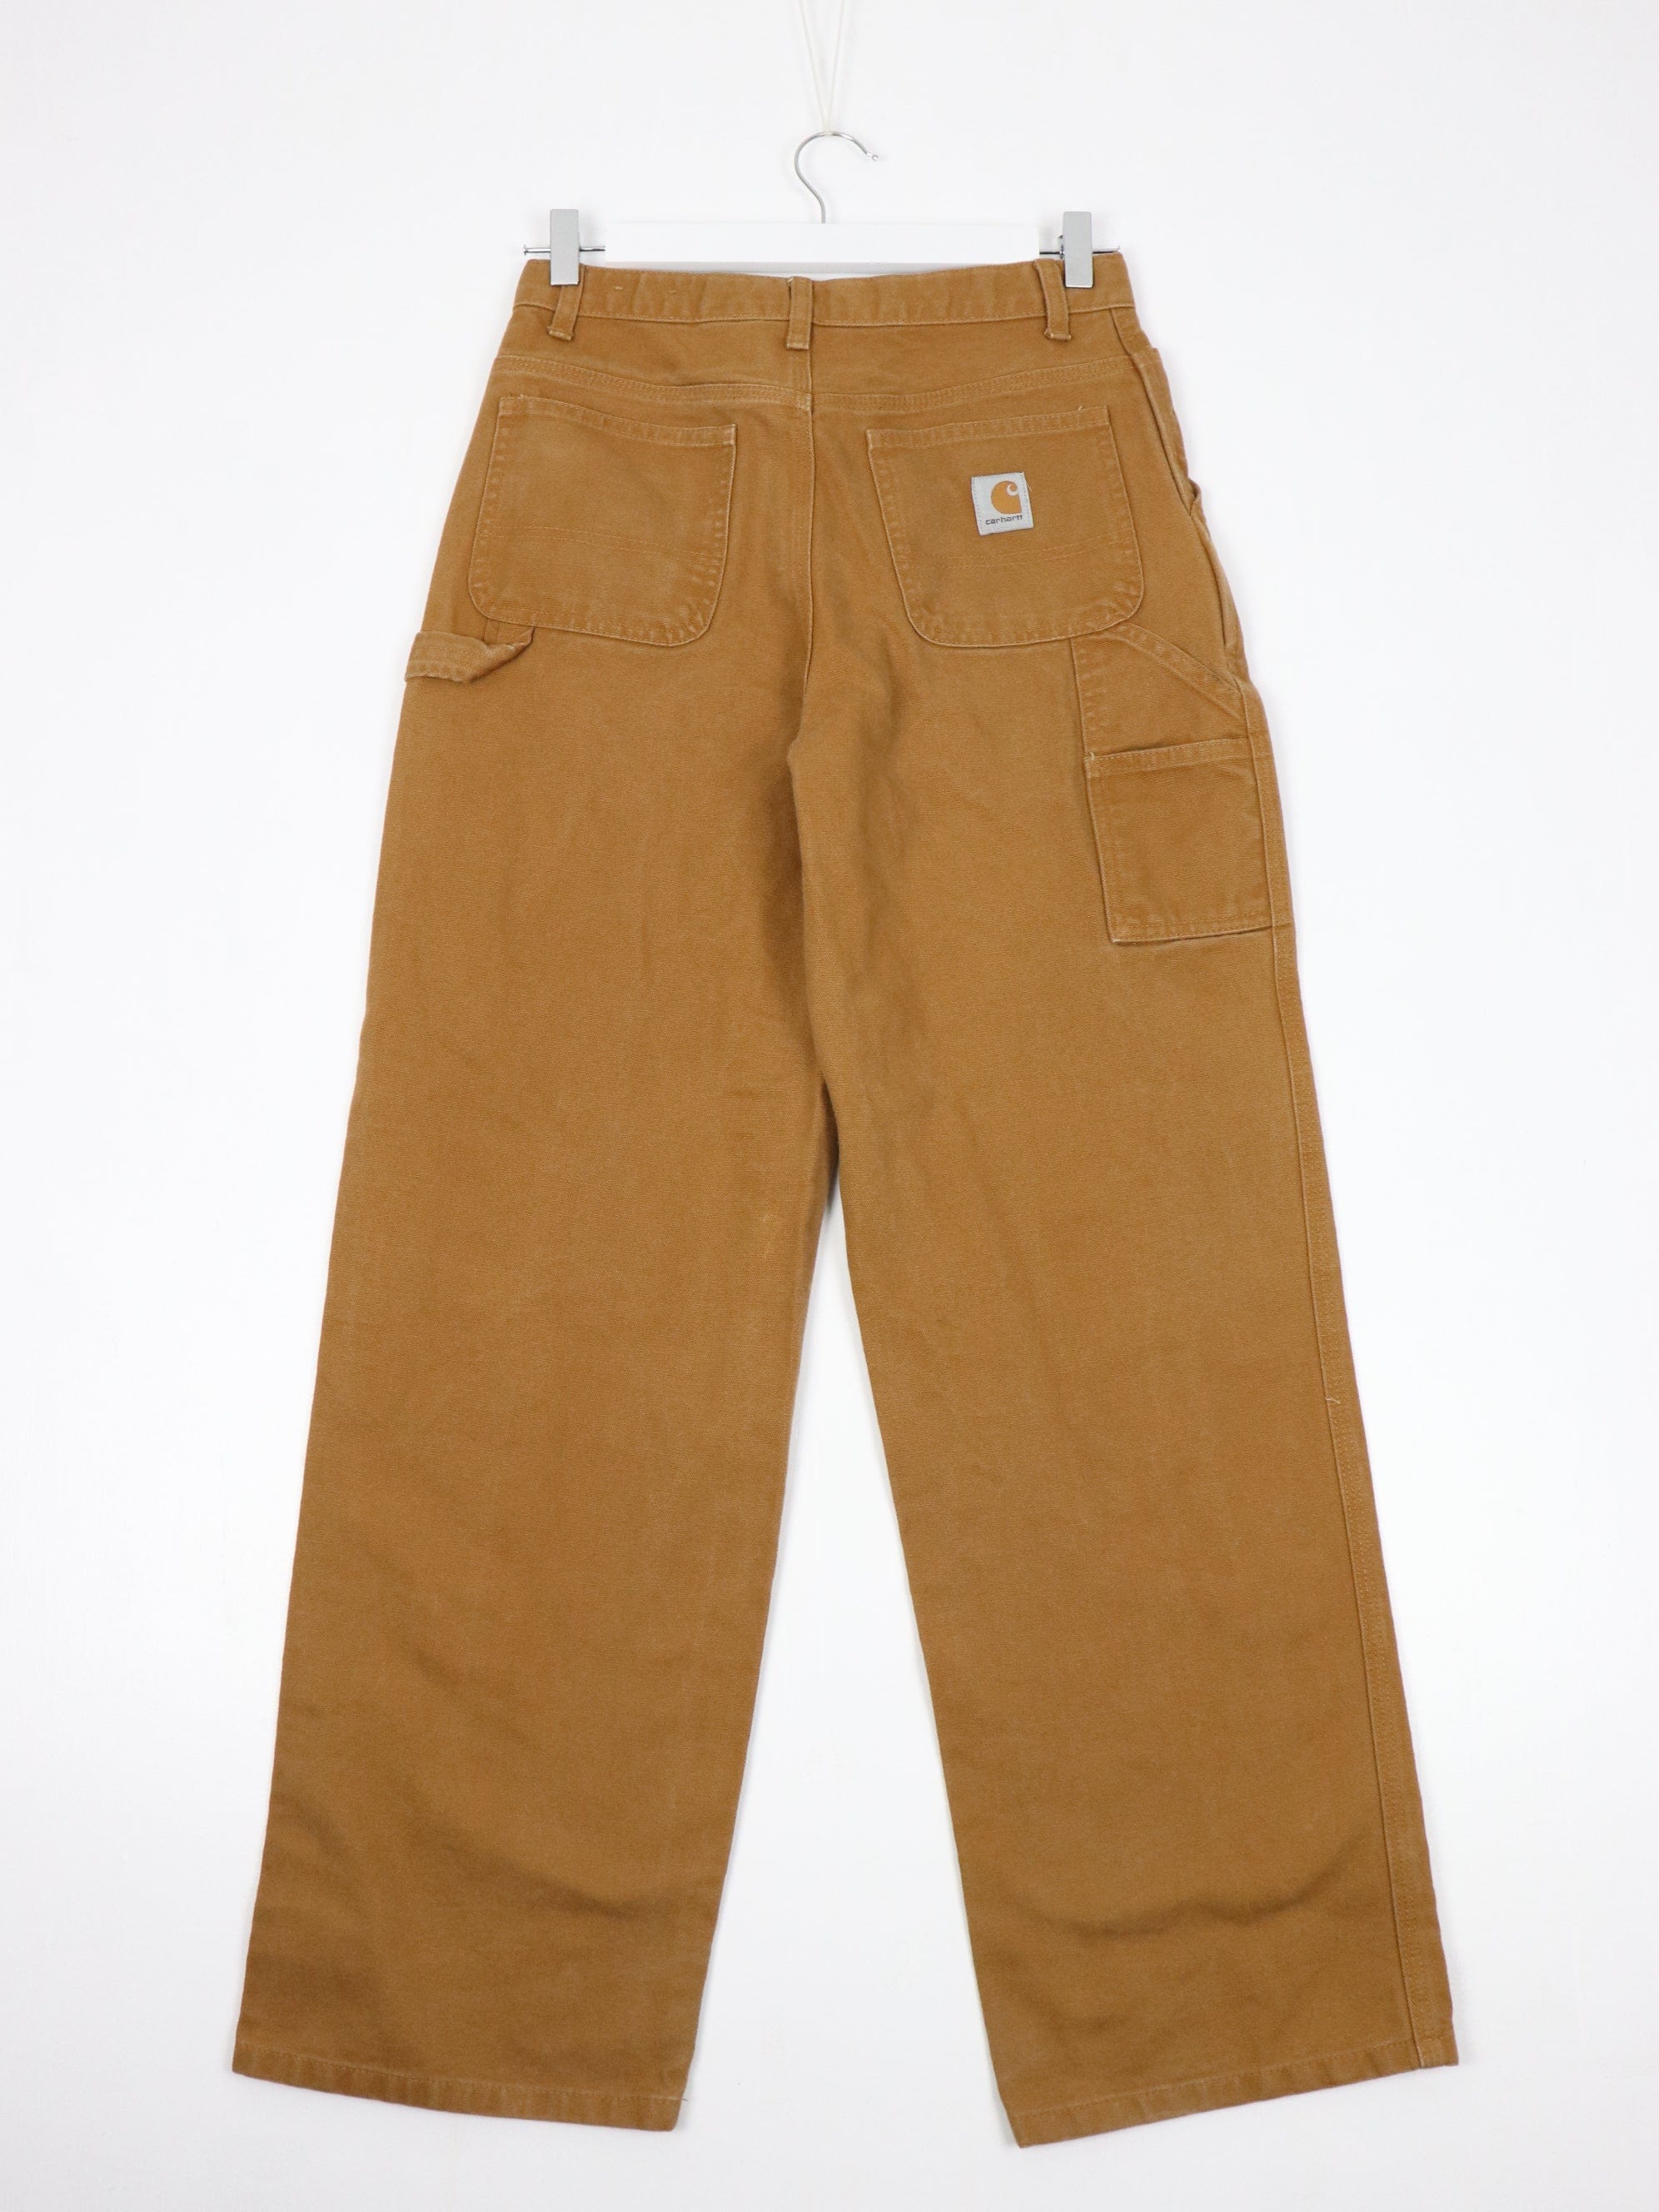 Carhartt Pants Womens 16 Brown Work Wear Carpenters 28 x 29